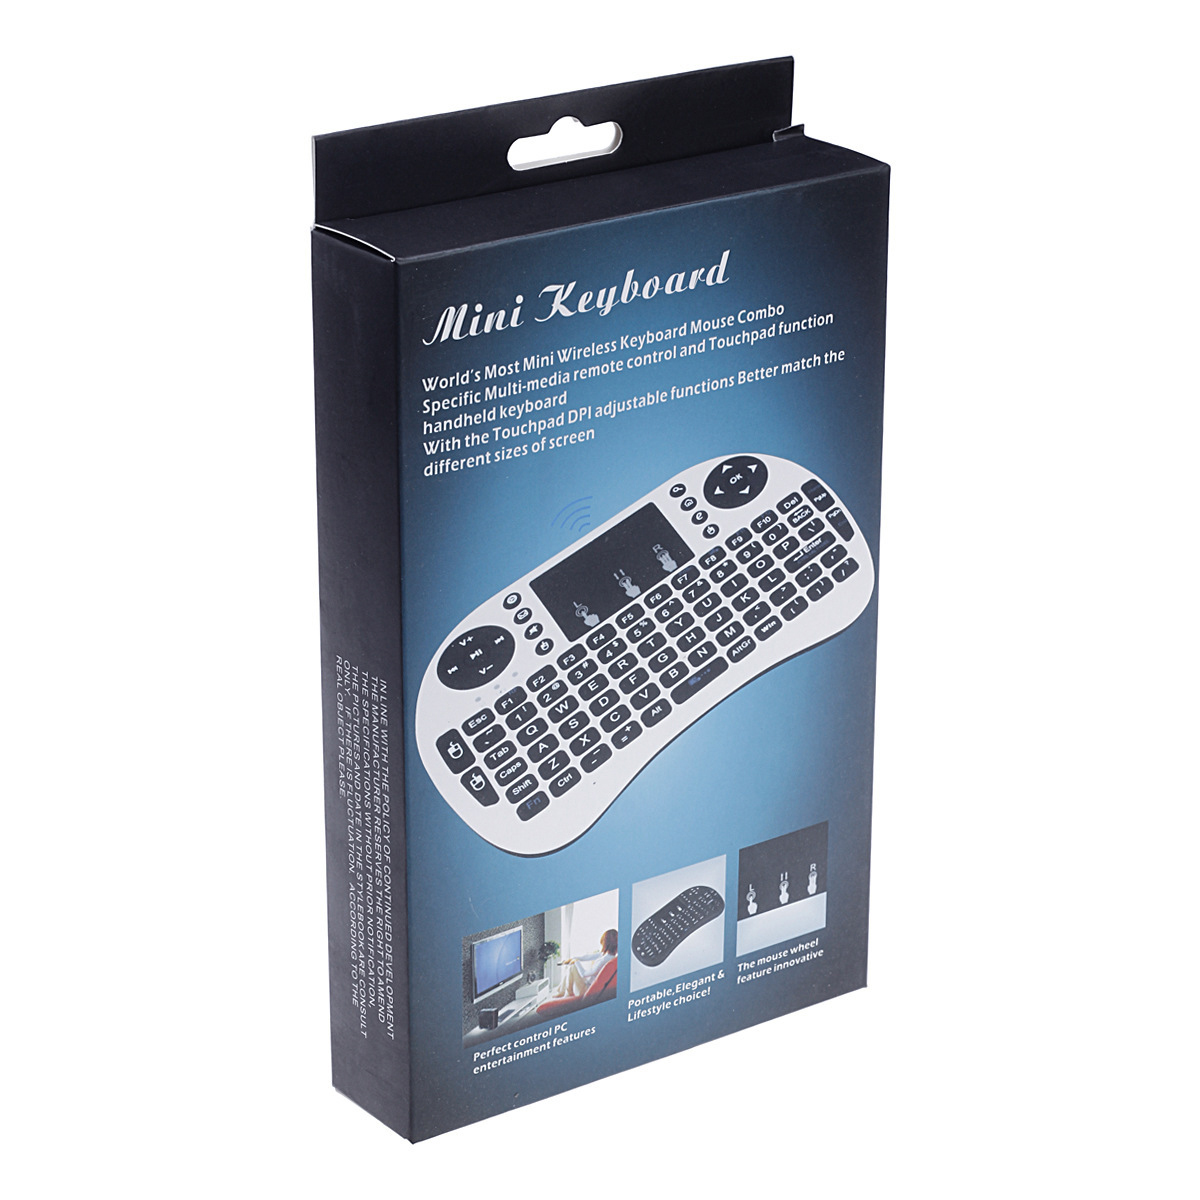 Rii i8 Backlit Remote Air Mouse Mini teclado com Touchpad Backlight Controle sem fio para Android Smart TV Box MXQ M8S X96 T95 X92 HTPC PS3 Novo